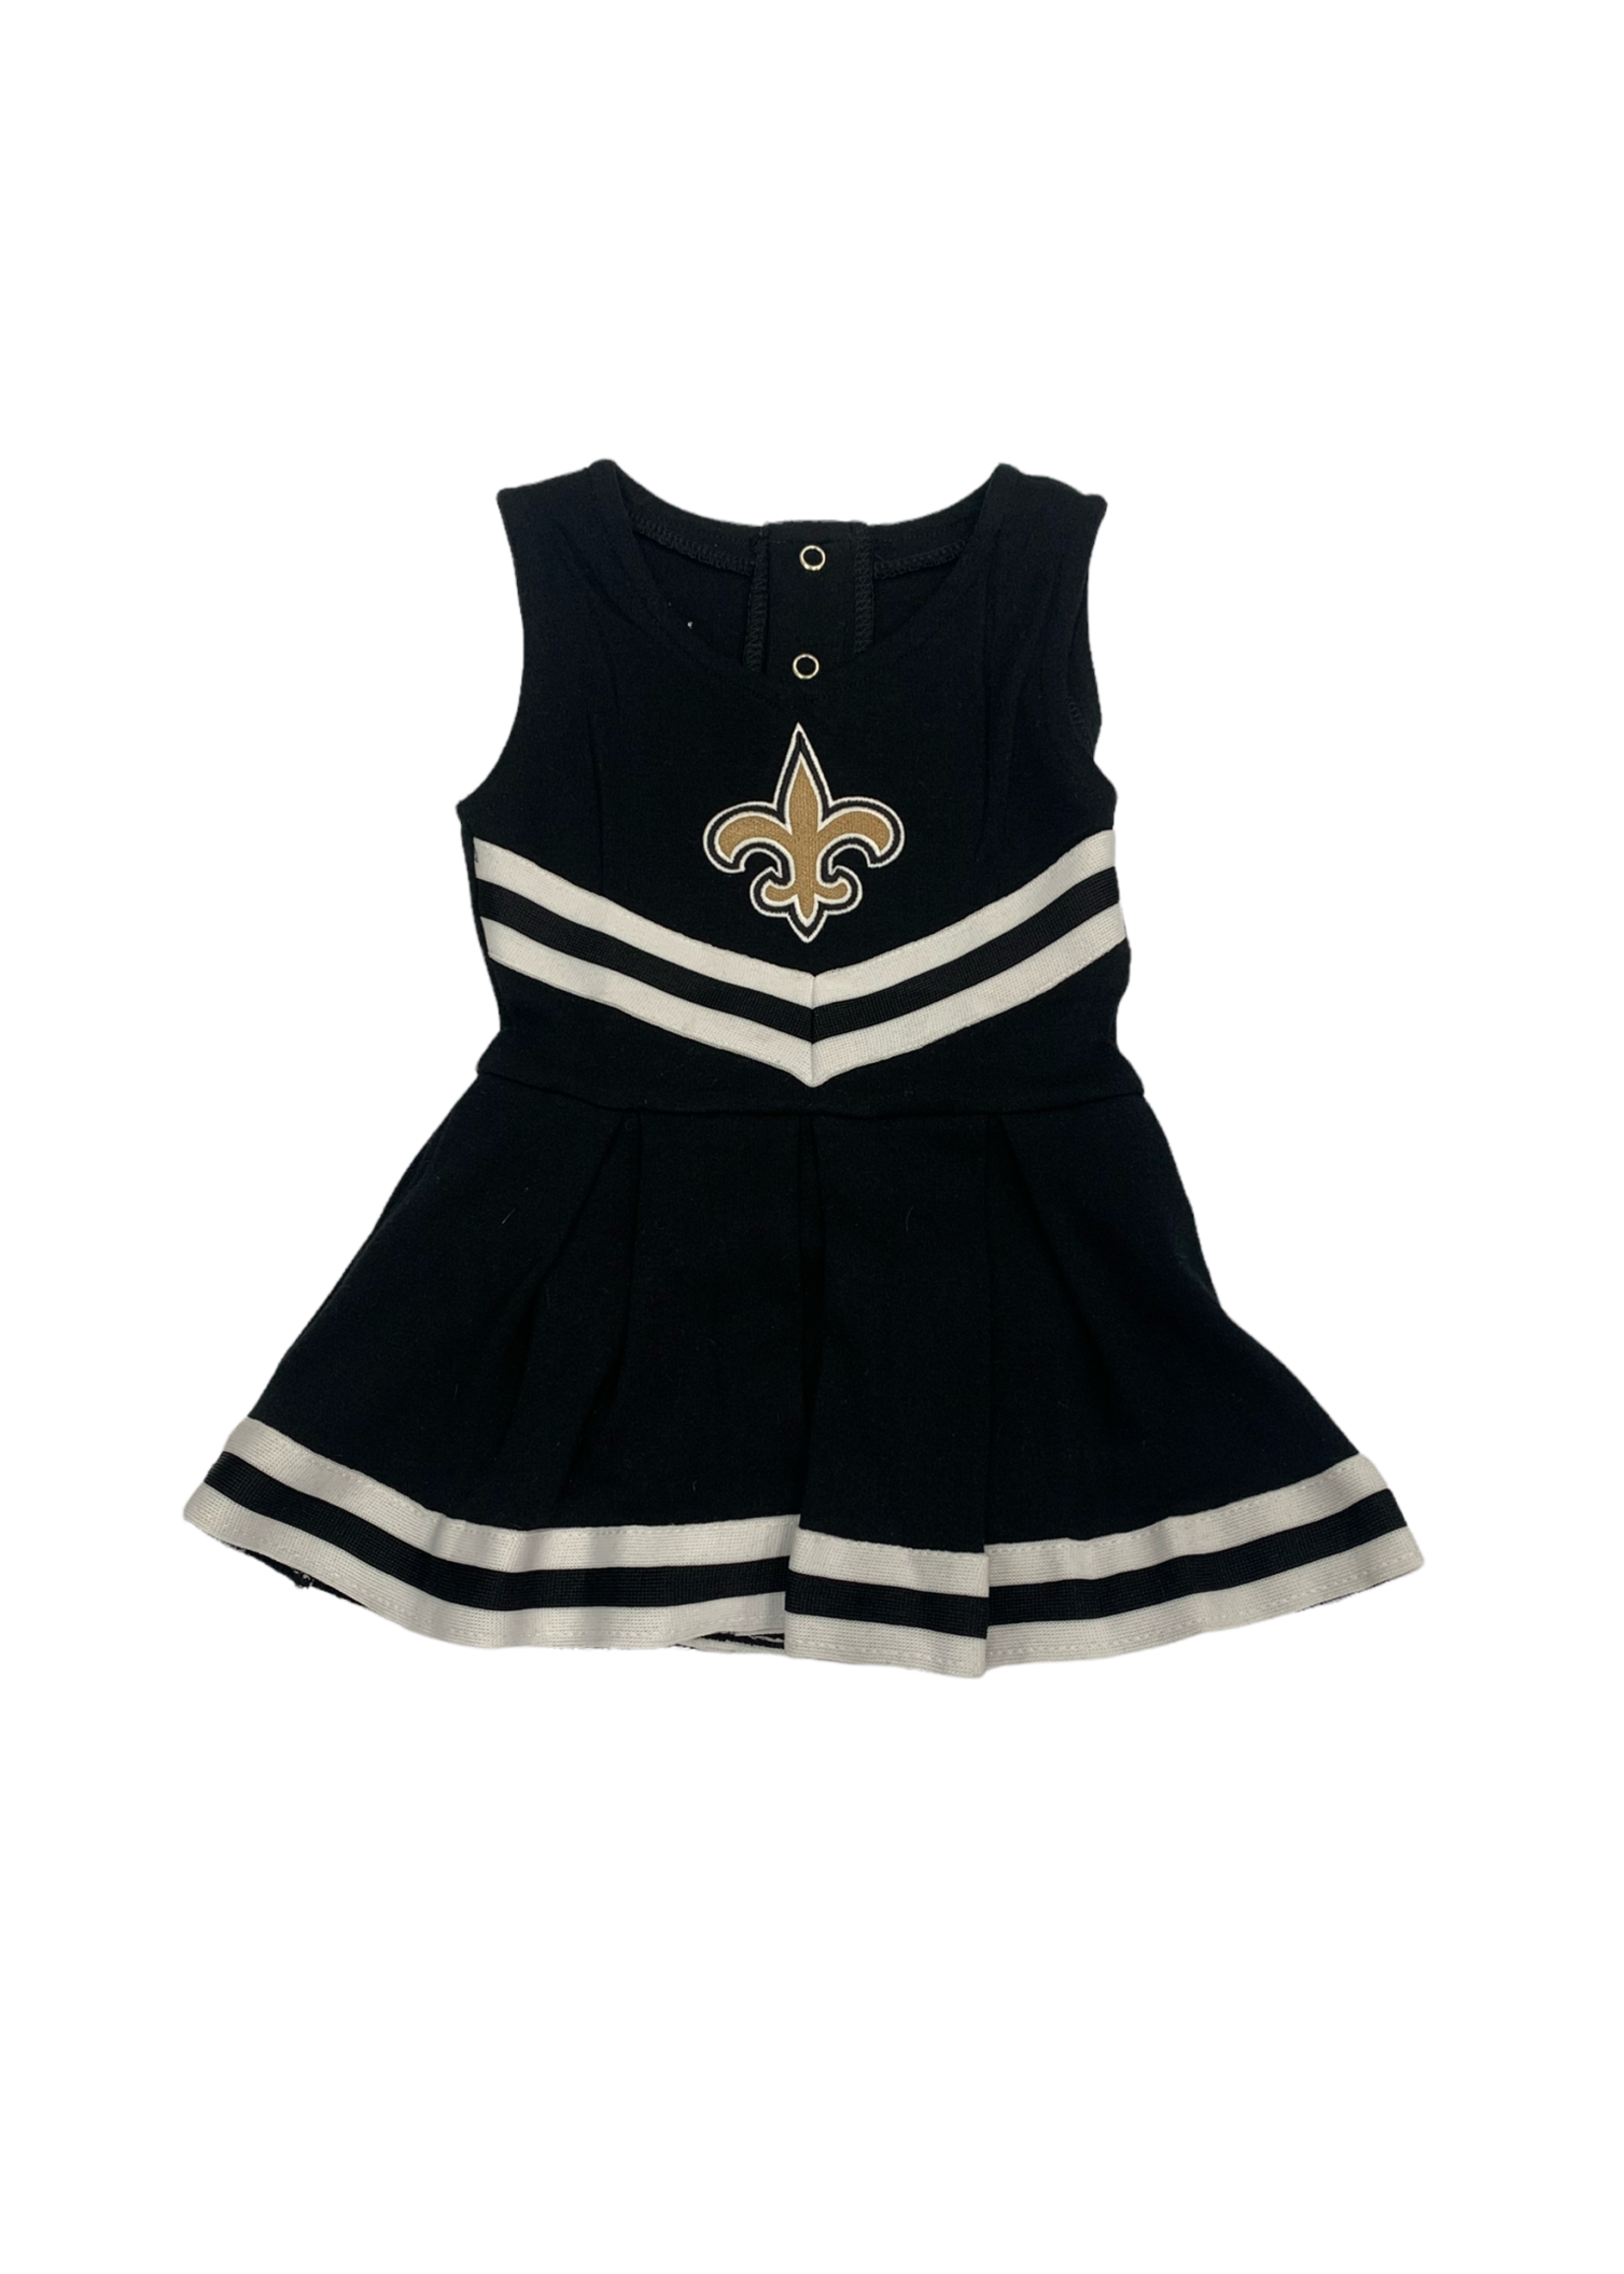 Creative Knitwear Saints - Black Cheer Bodysuit Dress - 366